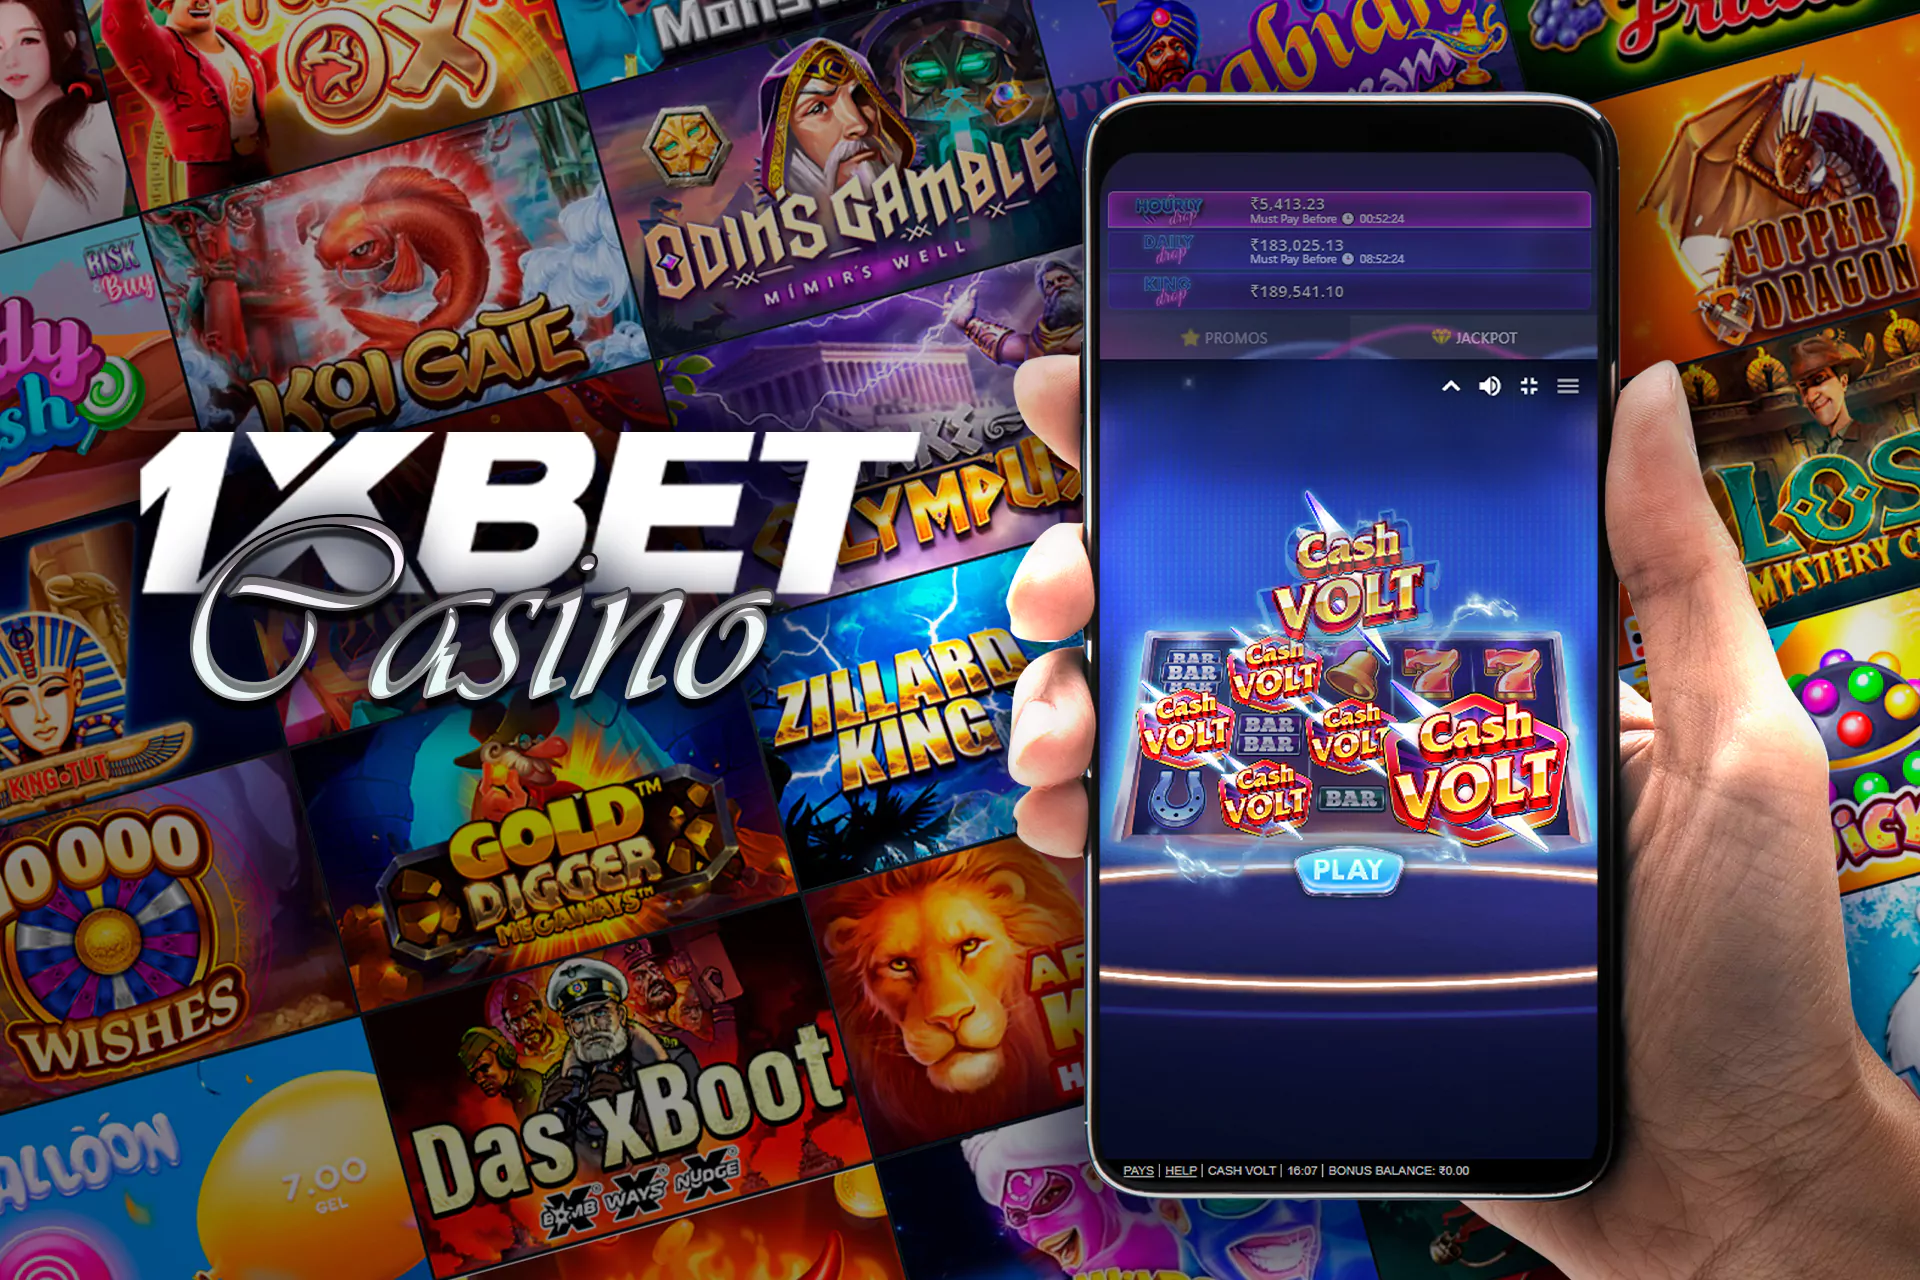 1xbet casino welcome bonus in the app